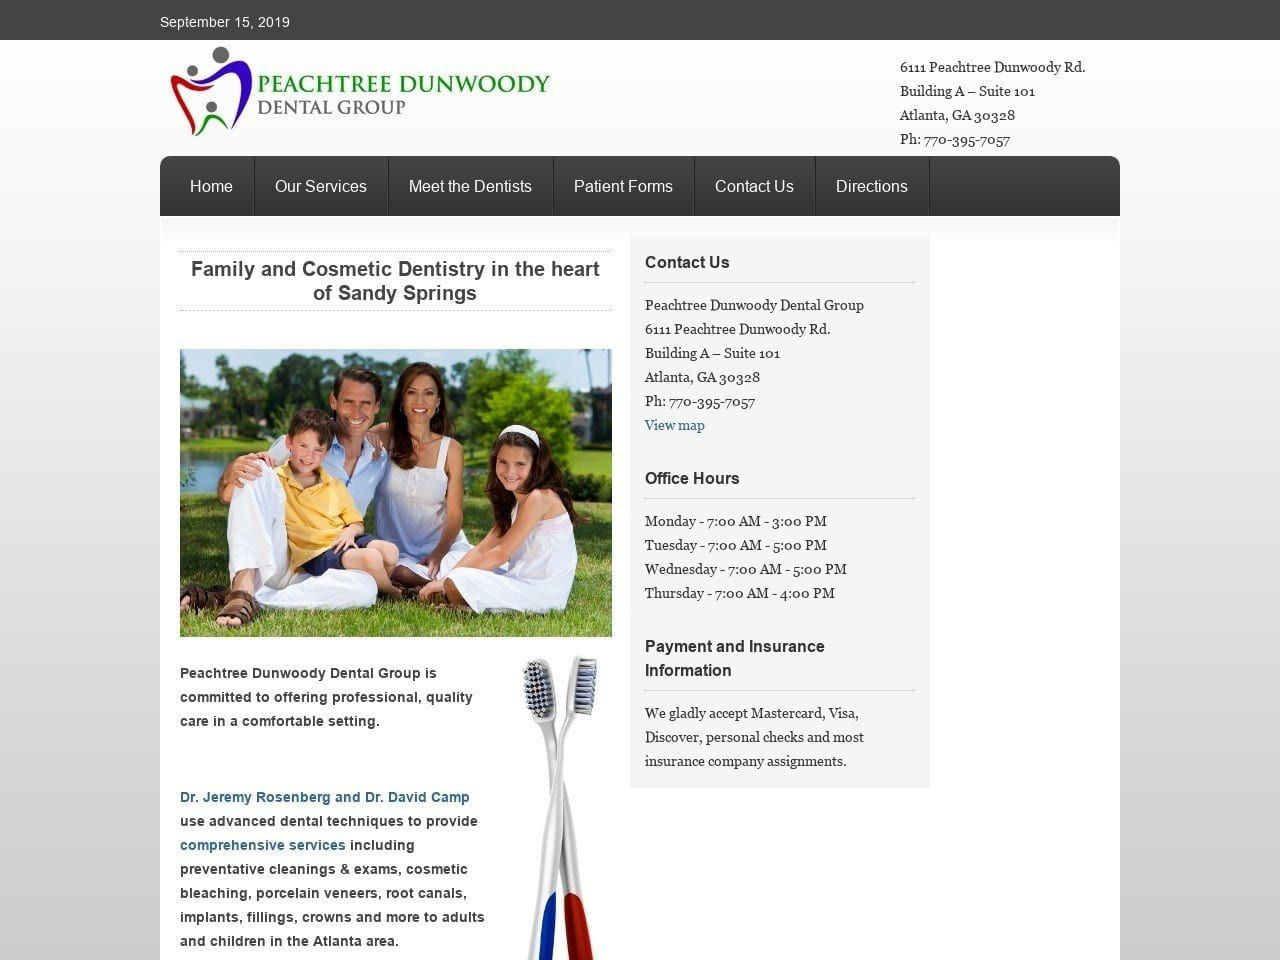 Peachtree Dunwoody Dental Group Website Screenshot from peachdentist.com